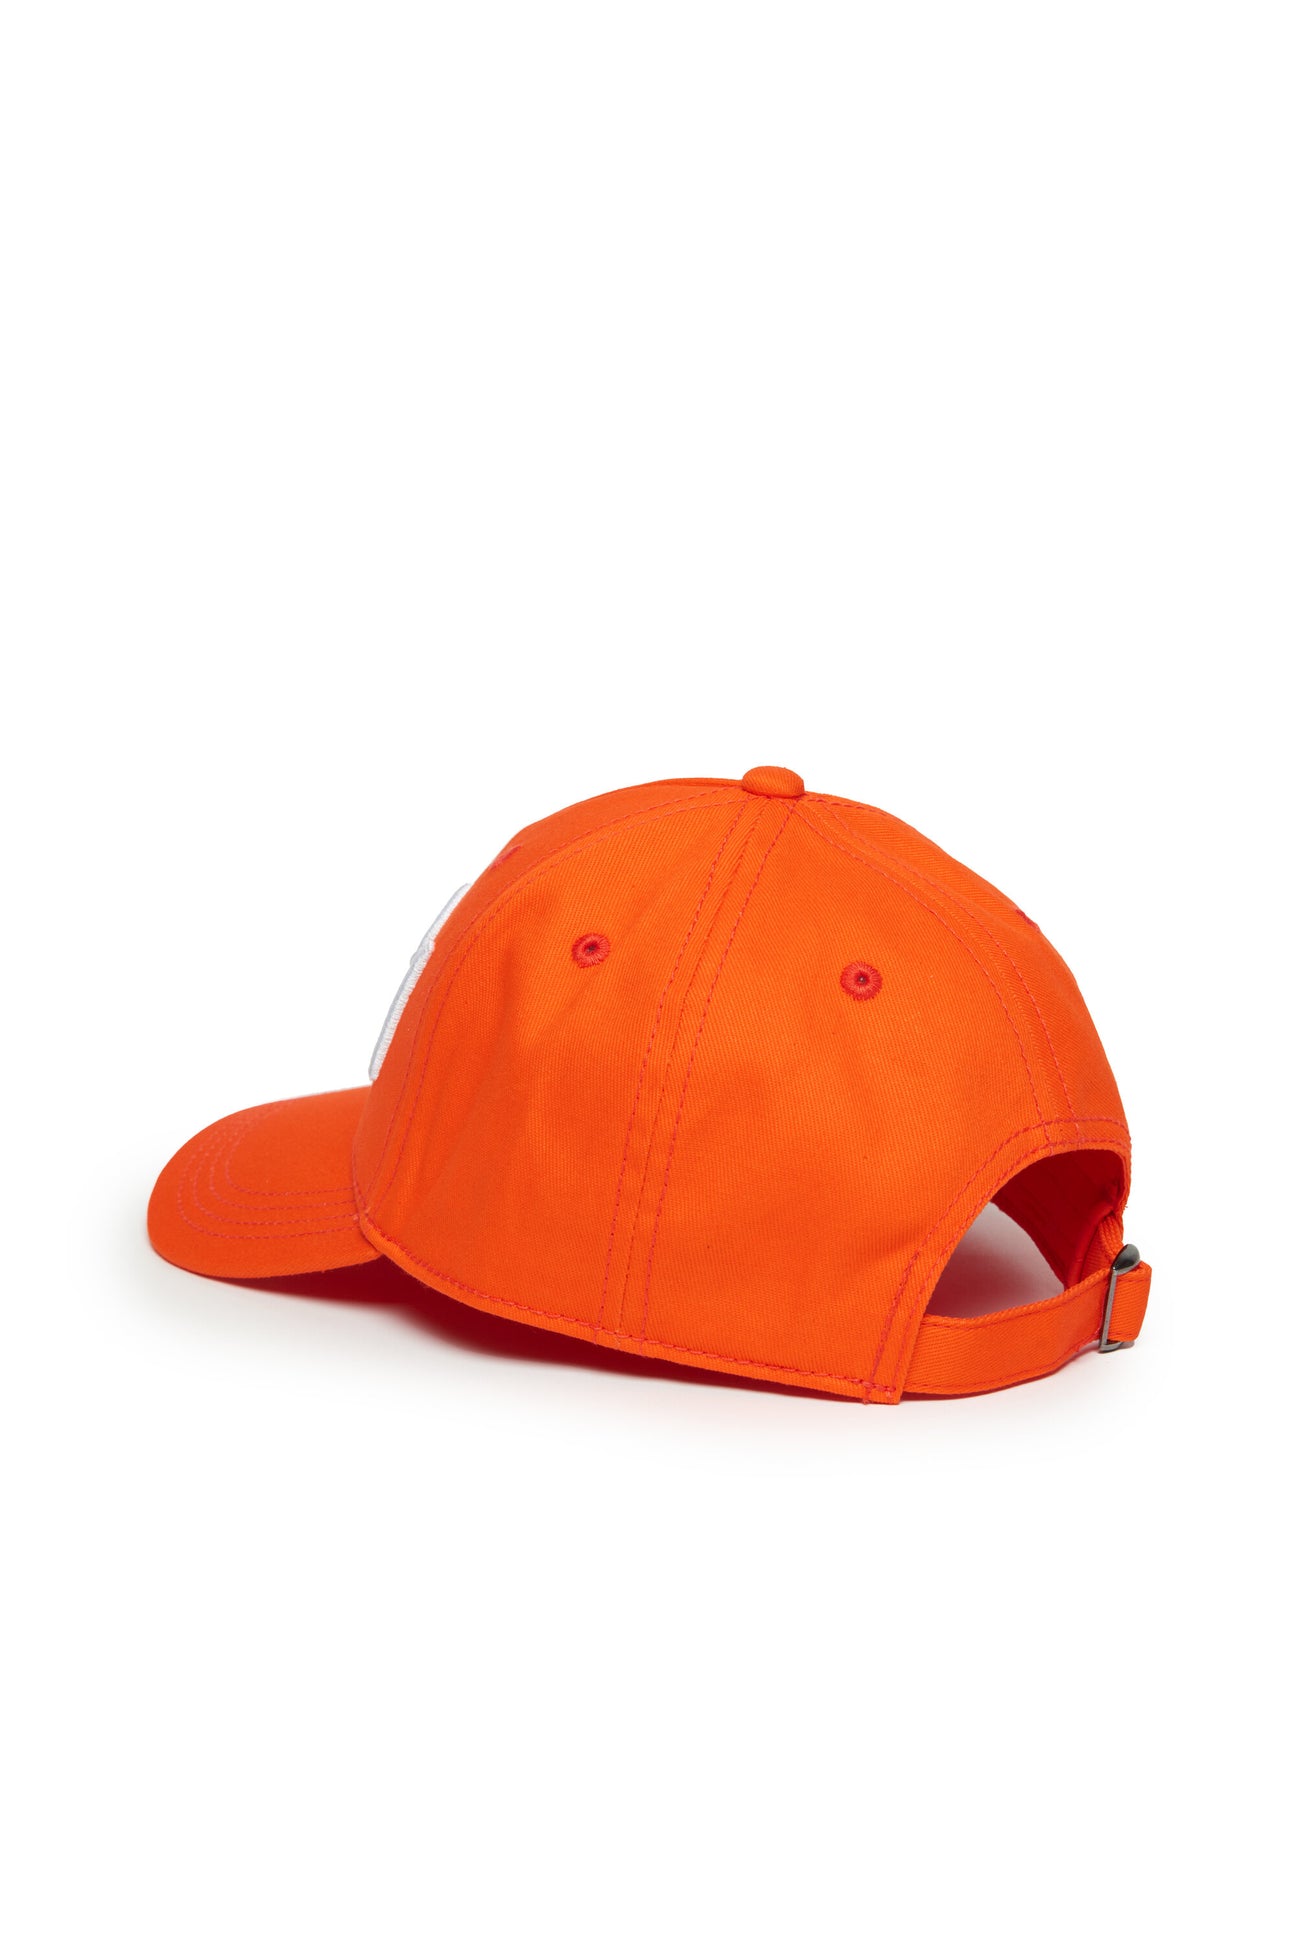 Fluo orange gabardine baseball cap with logo Fluo orange gabardine baseball cap with logo